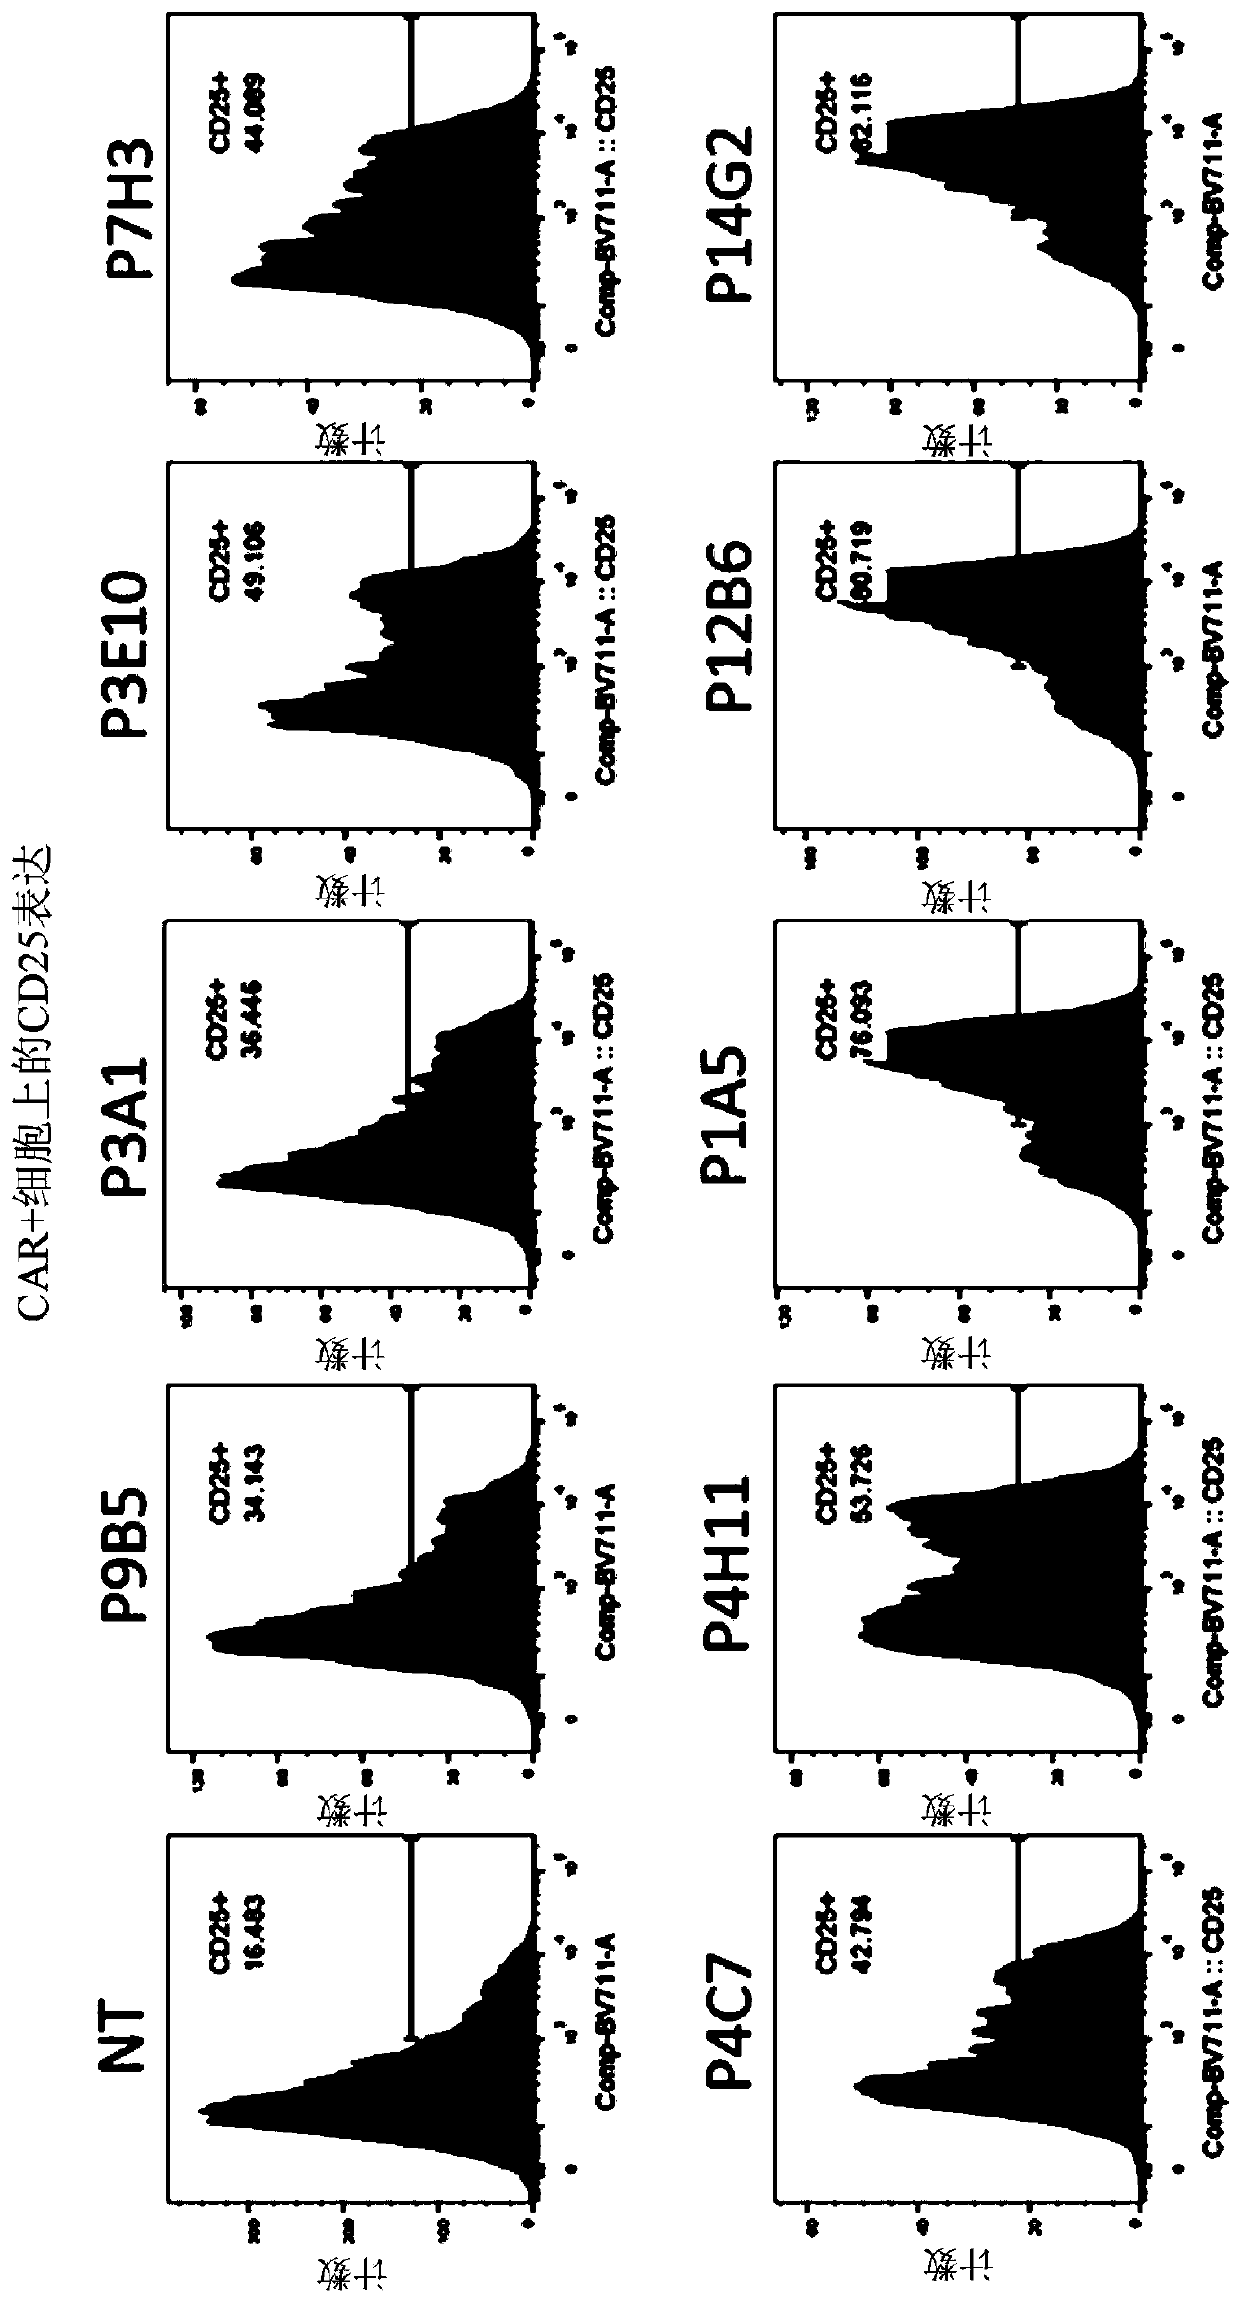 Chimeric antigen receptors targeting FLT3